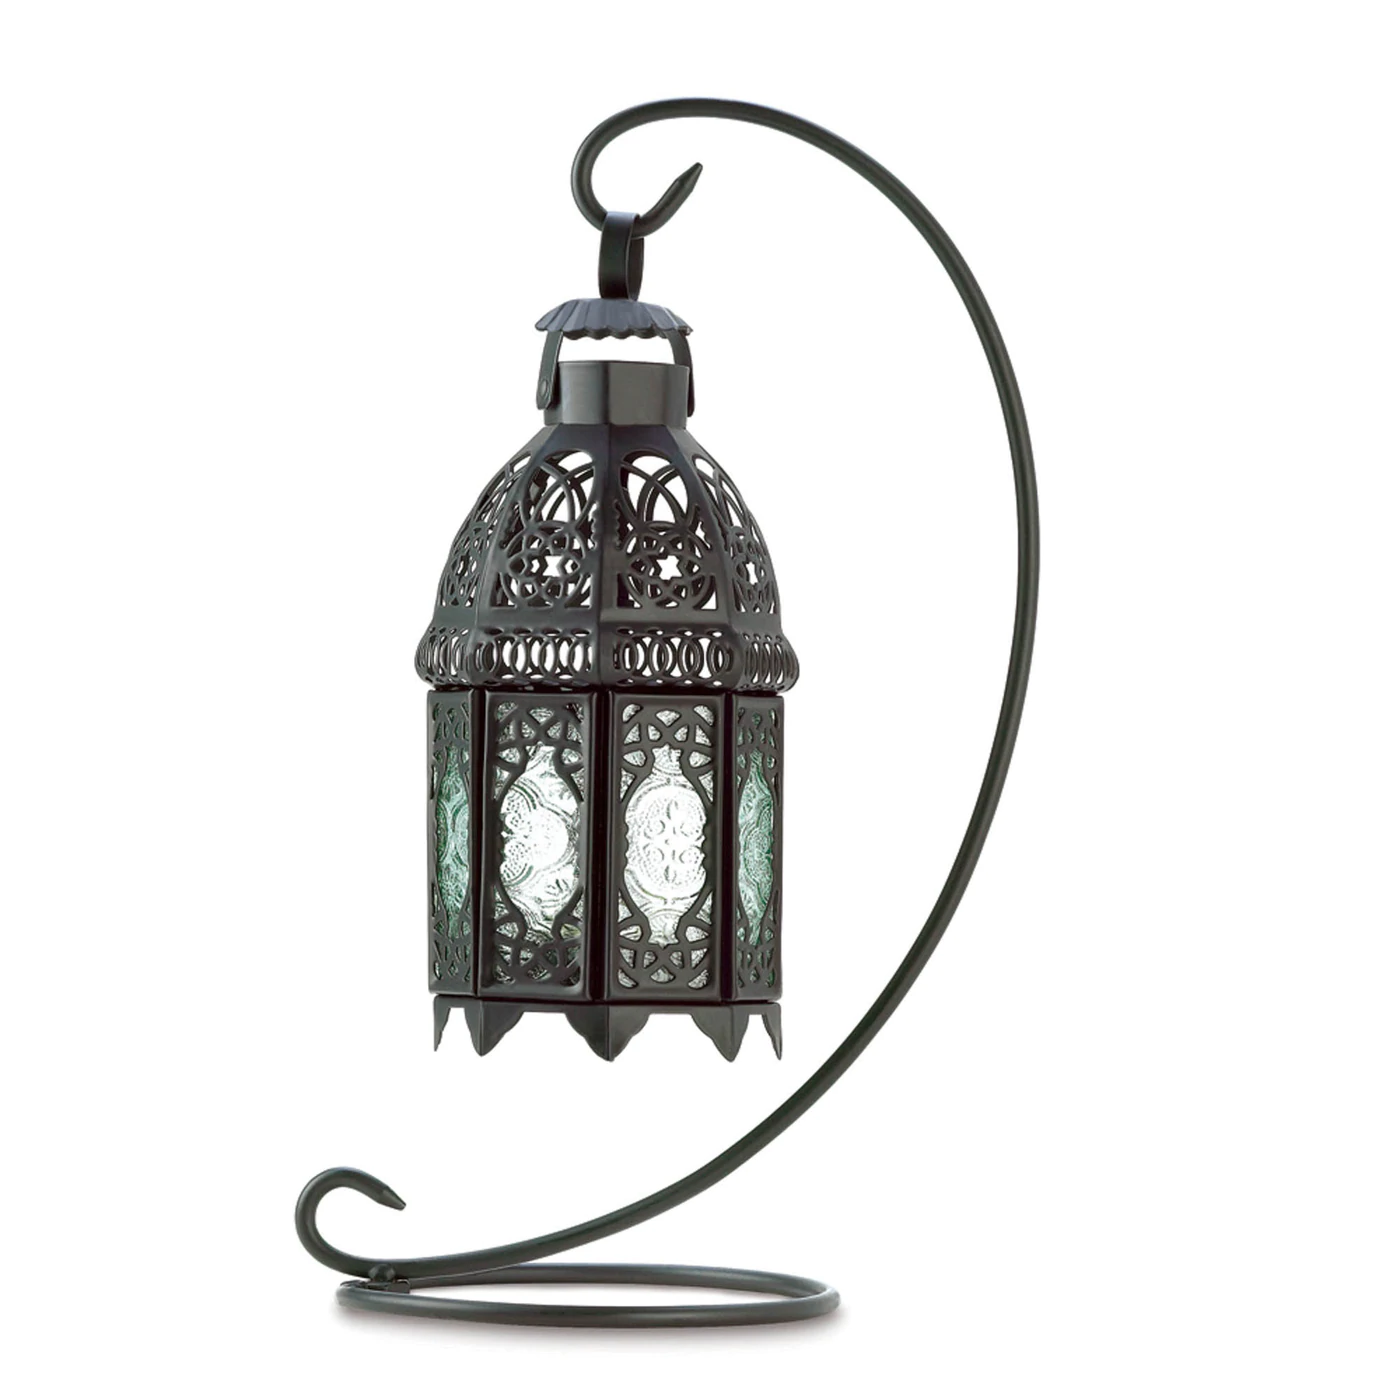 Moroccan Tabletop Lantern - $36.84